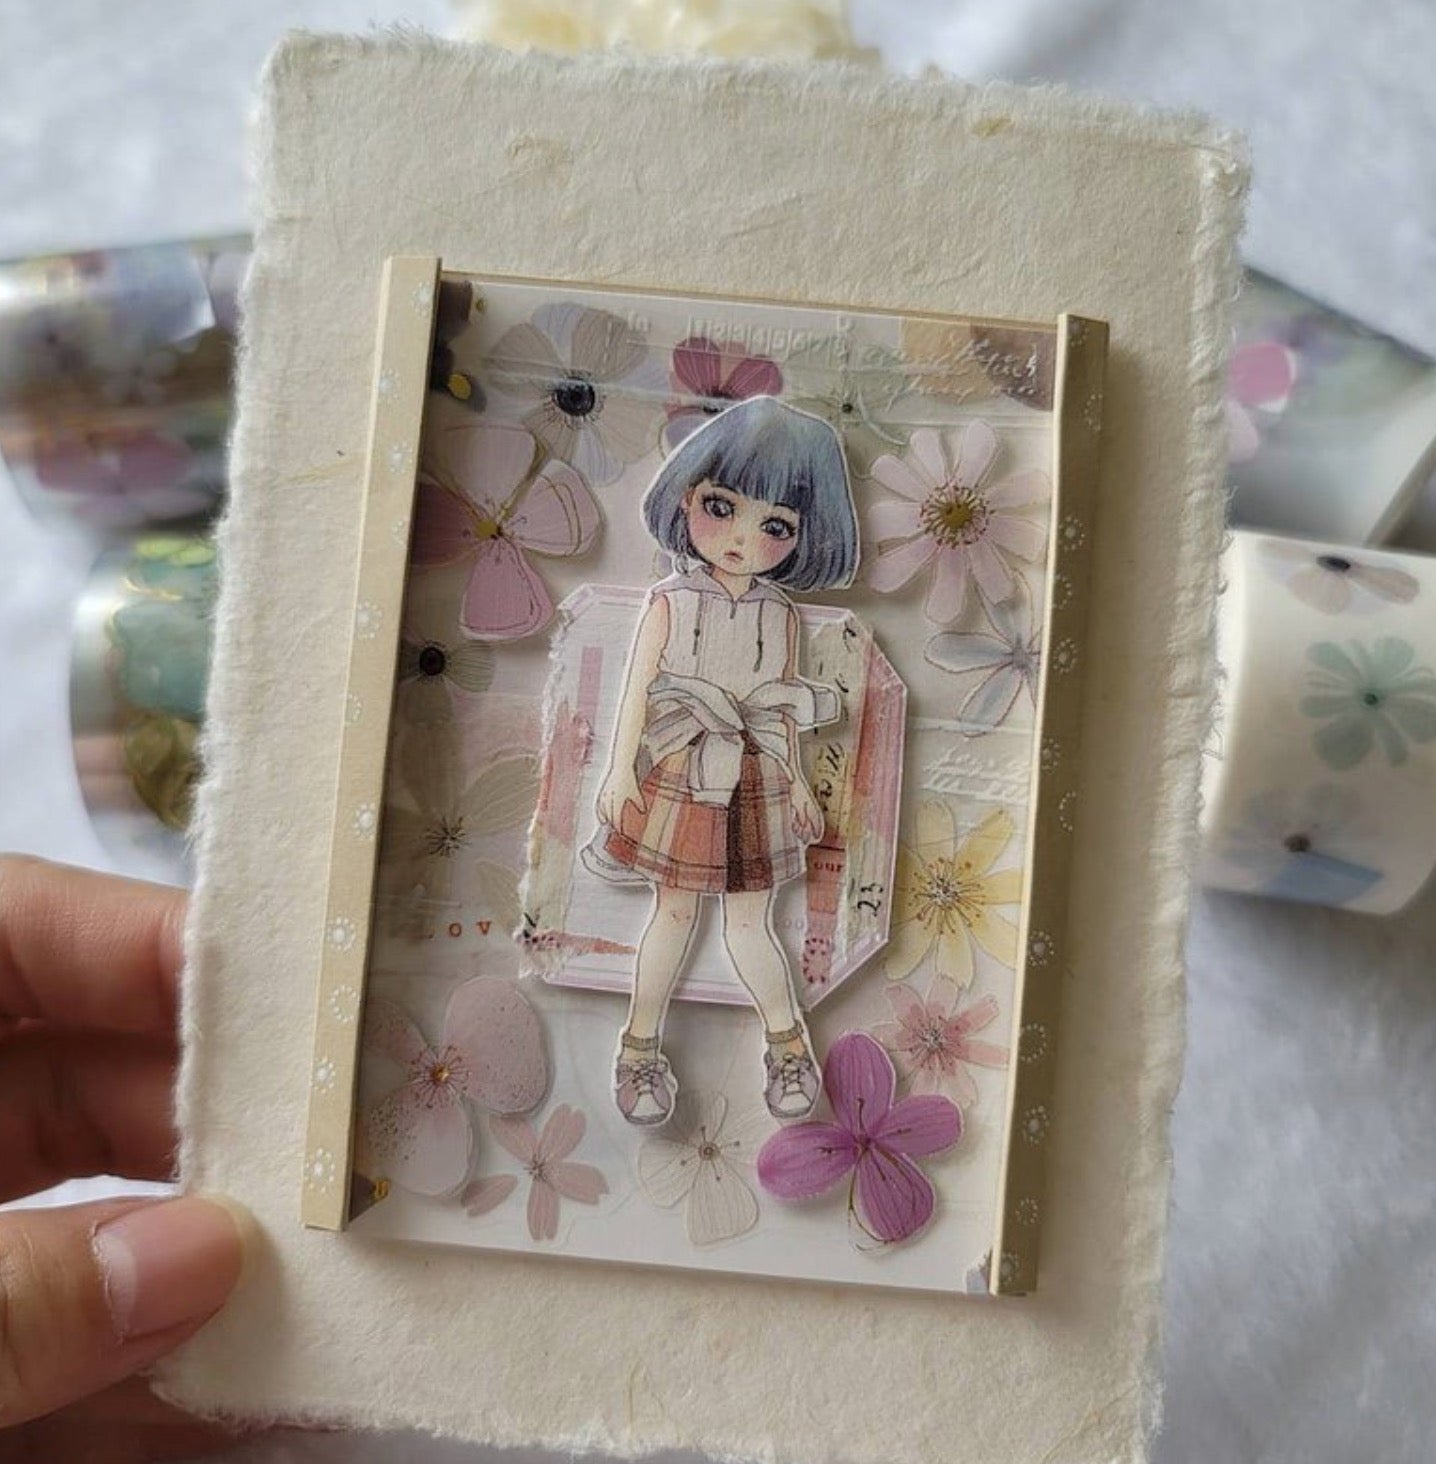 Fairy Maru (Fairy Ball) Floral Roll 15 Washi Tape, 30mm